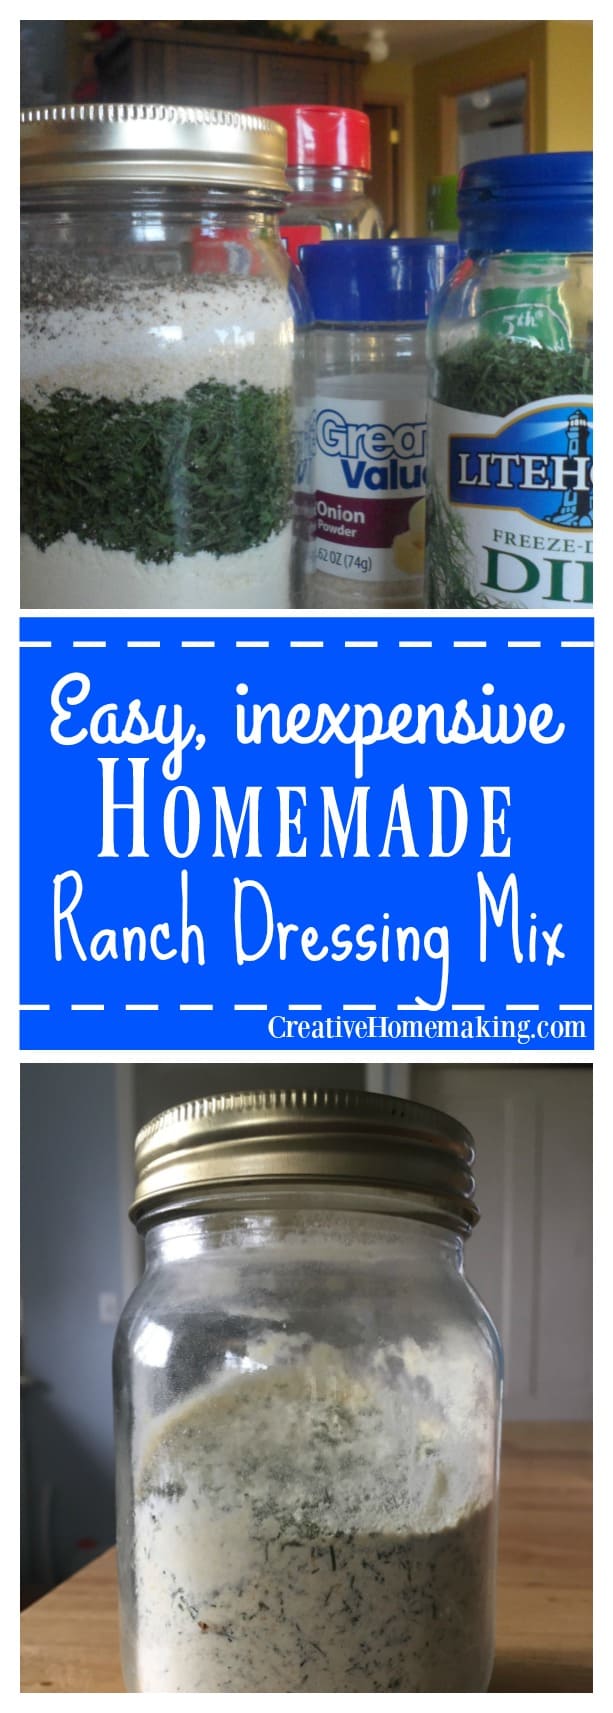 Ranch Dressing Mix - Creative Homemaking